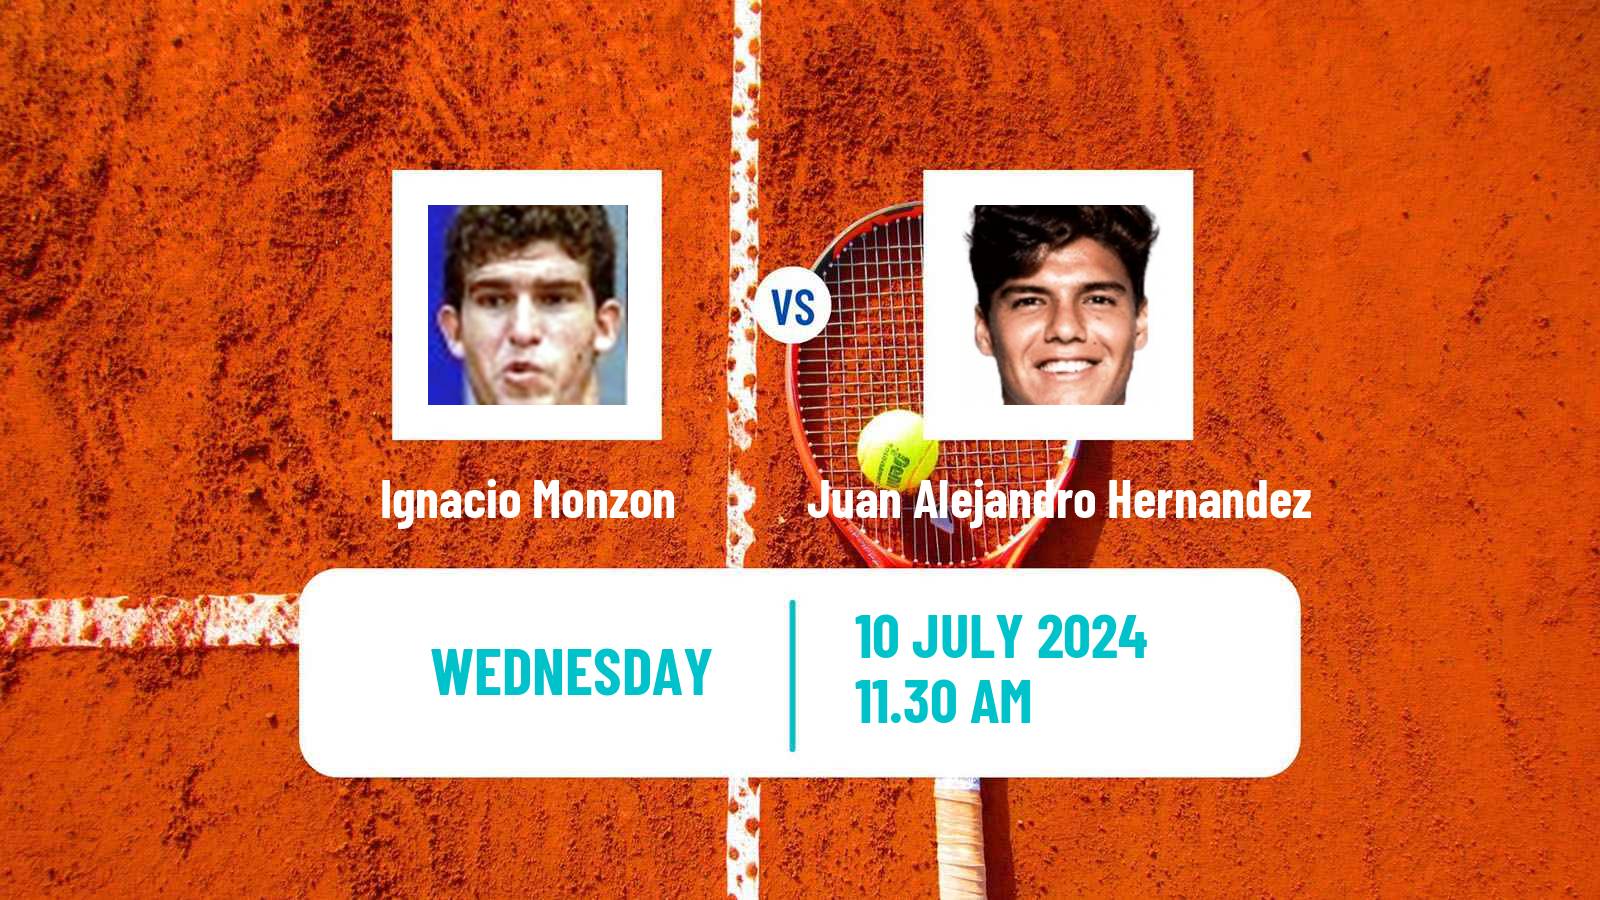 Tennis ITF M25 Sao Paulo Men Ignacio Monzon - Juan Alejandro Hernandez